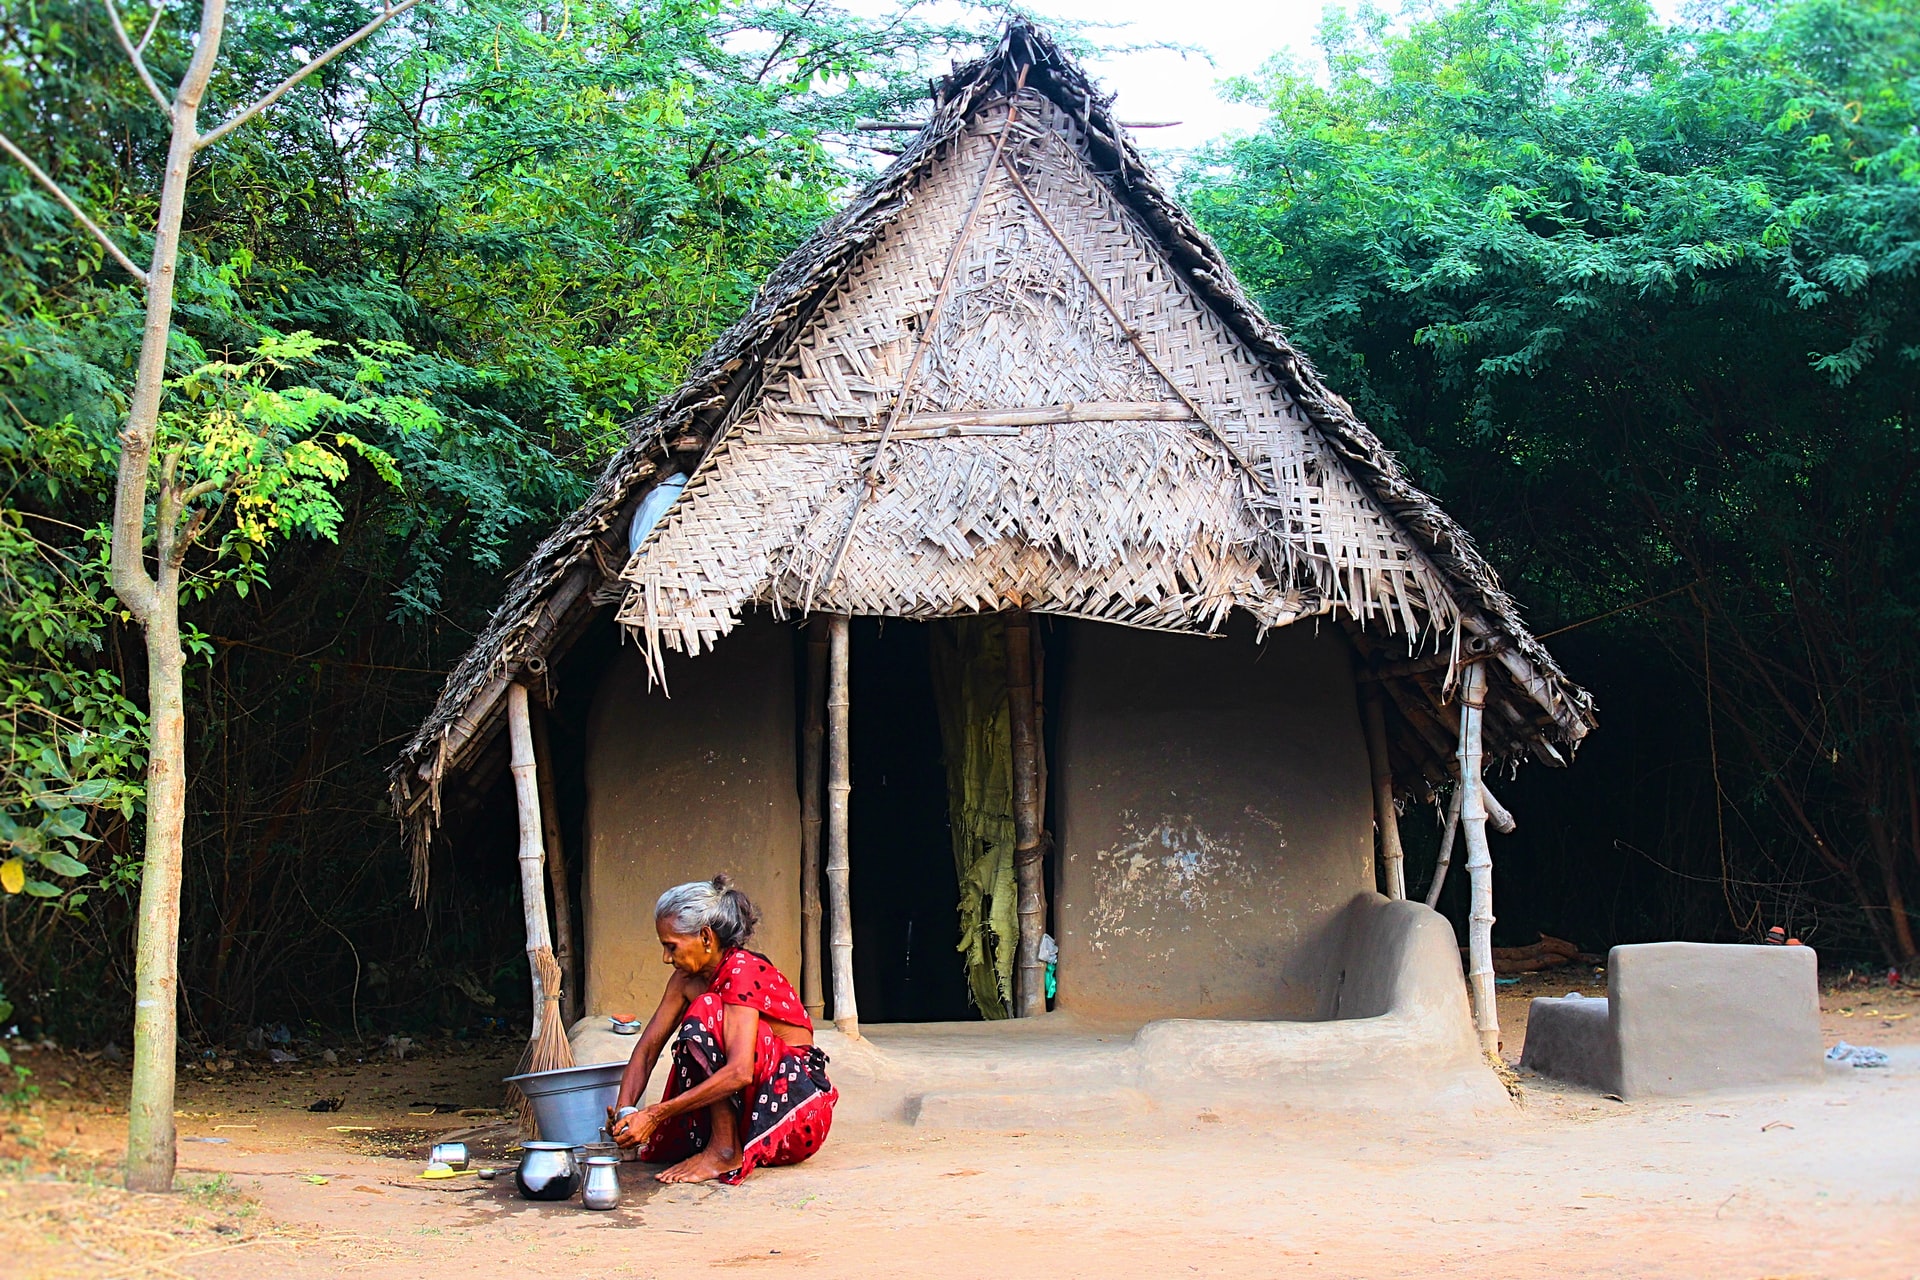 SVAMITVA: A Scheme for Rural India